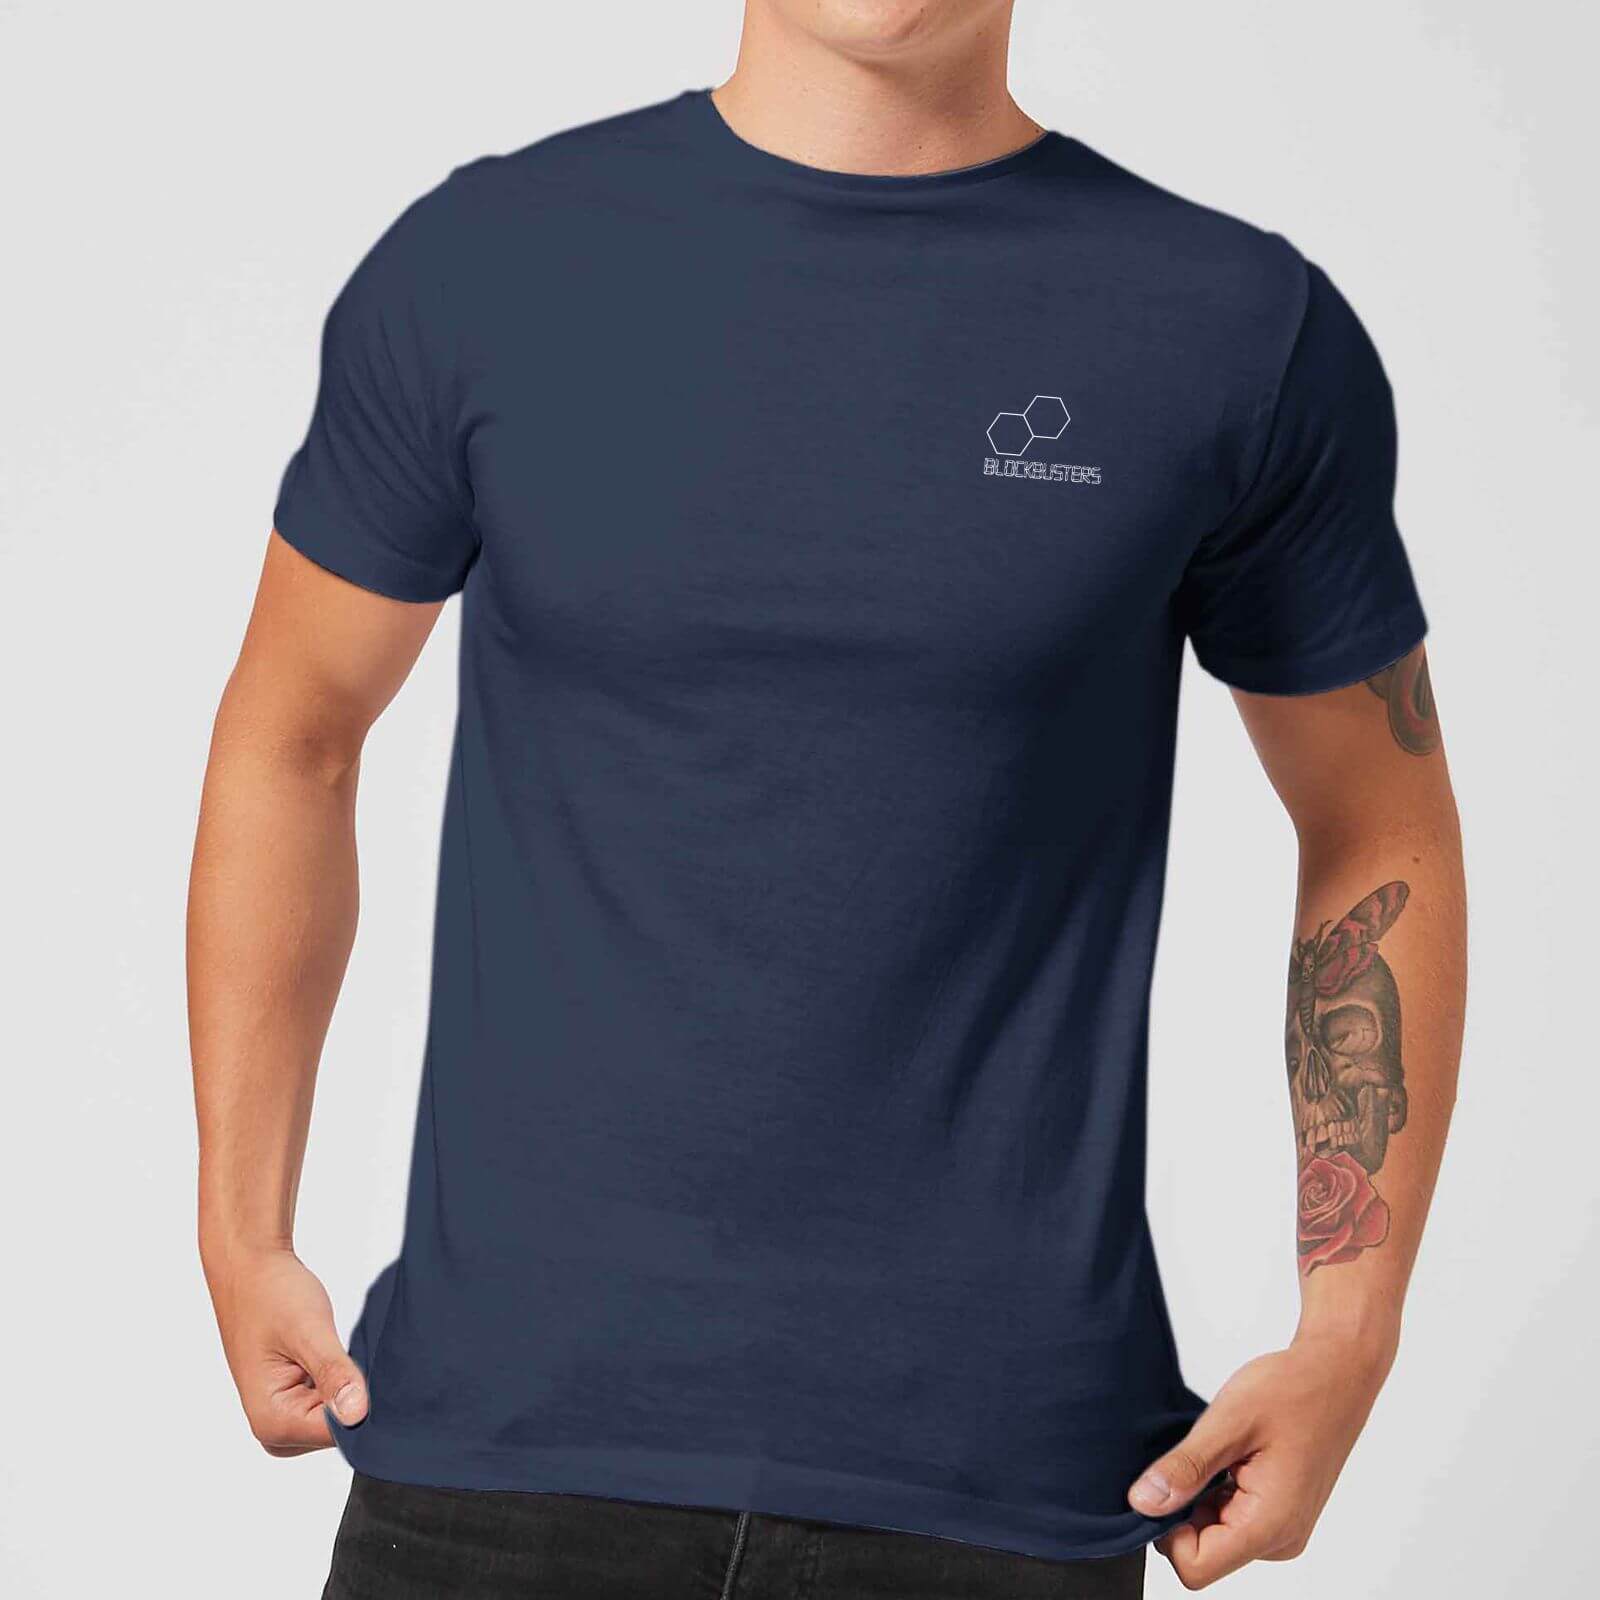 Blockbusters Pocket Print Men's T-Shirt - Navy - S - Navy